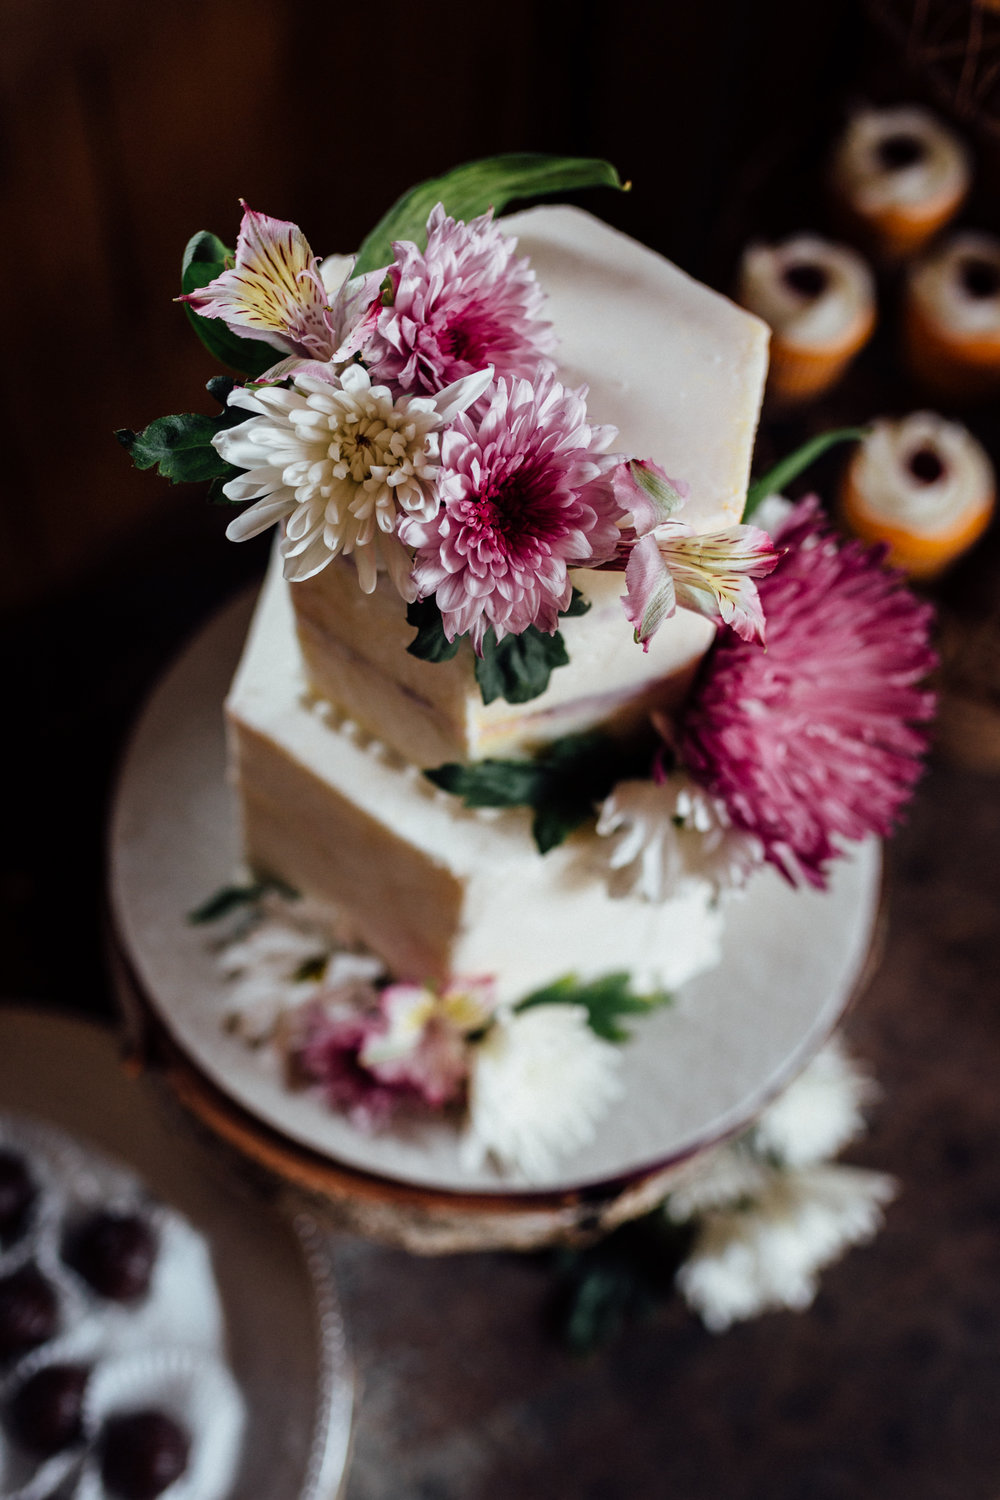 Midnight Sun Cakery wedding cake with flowers